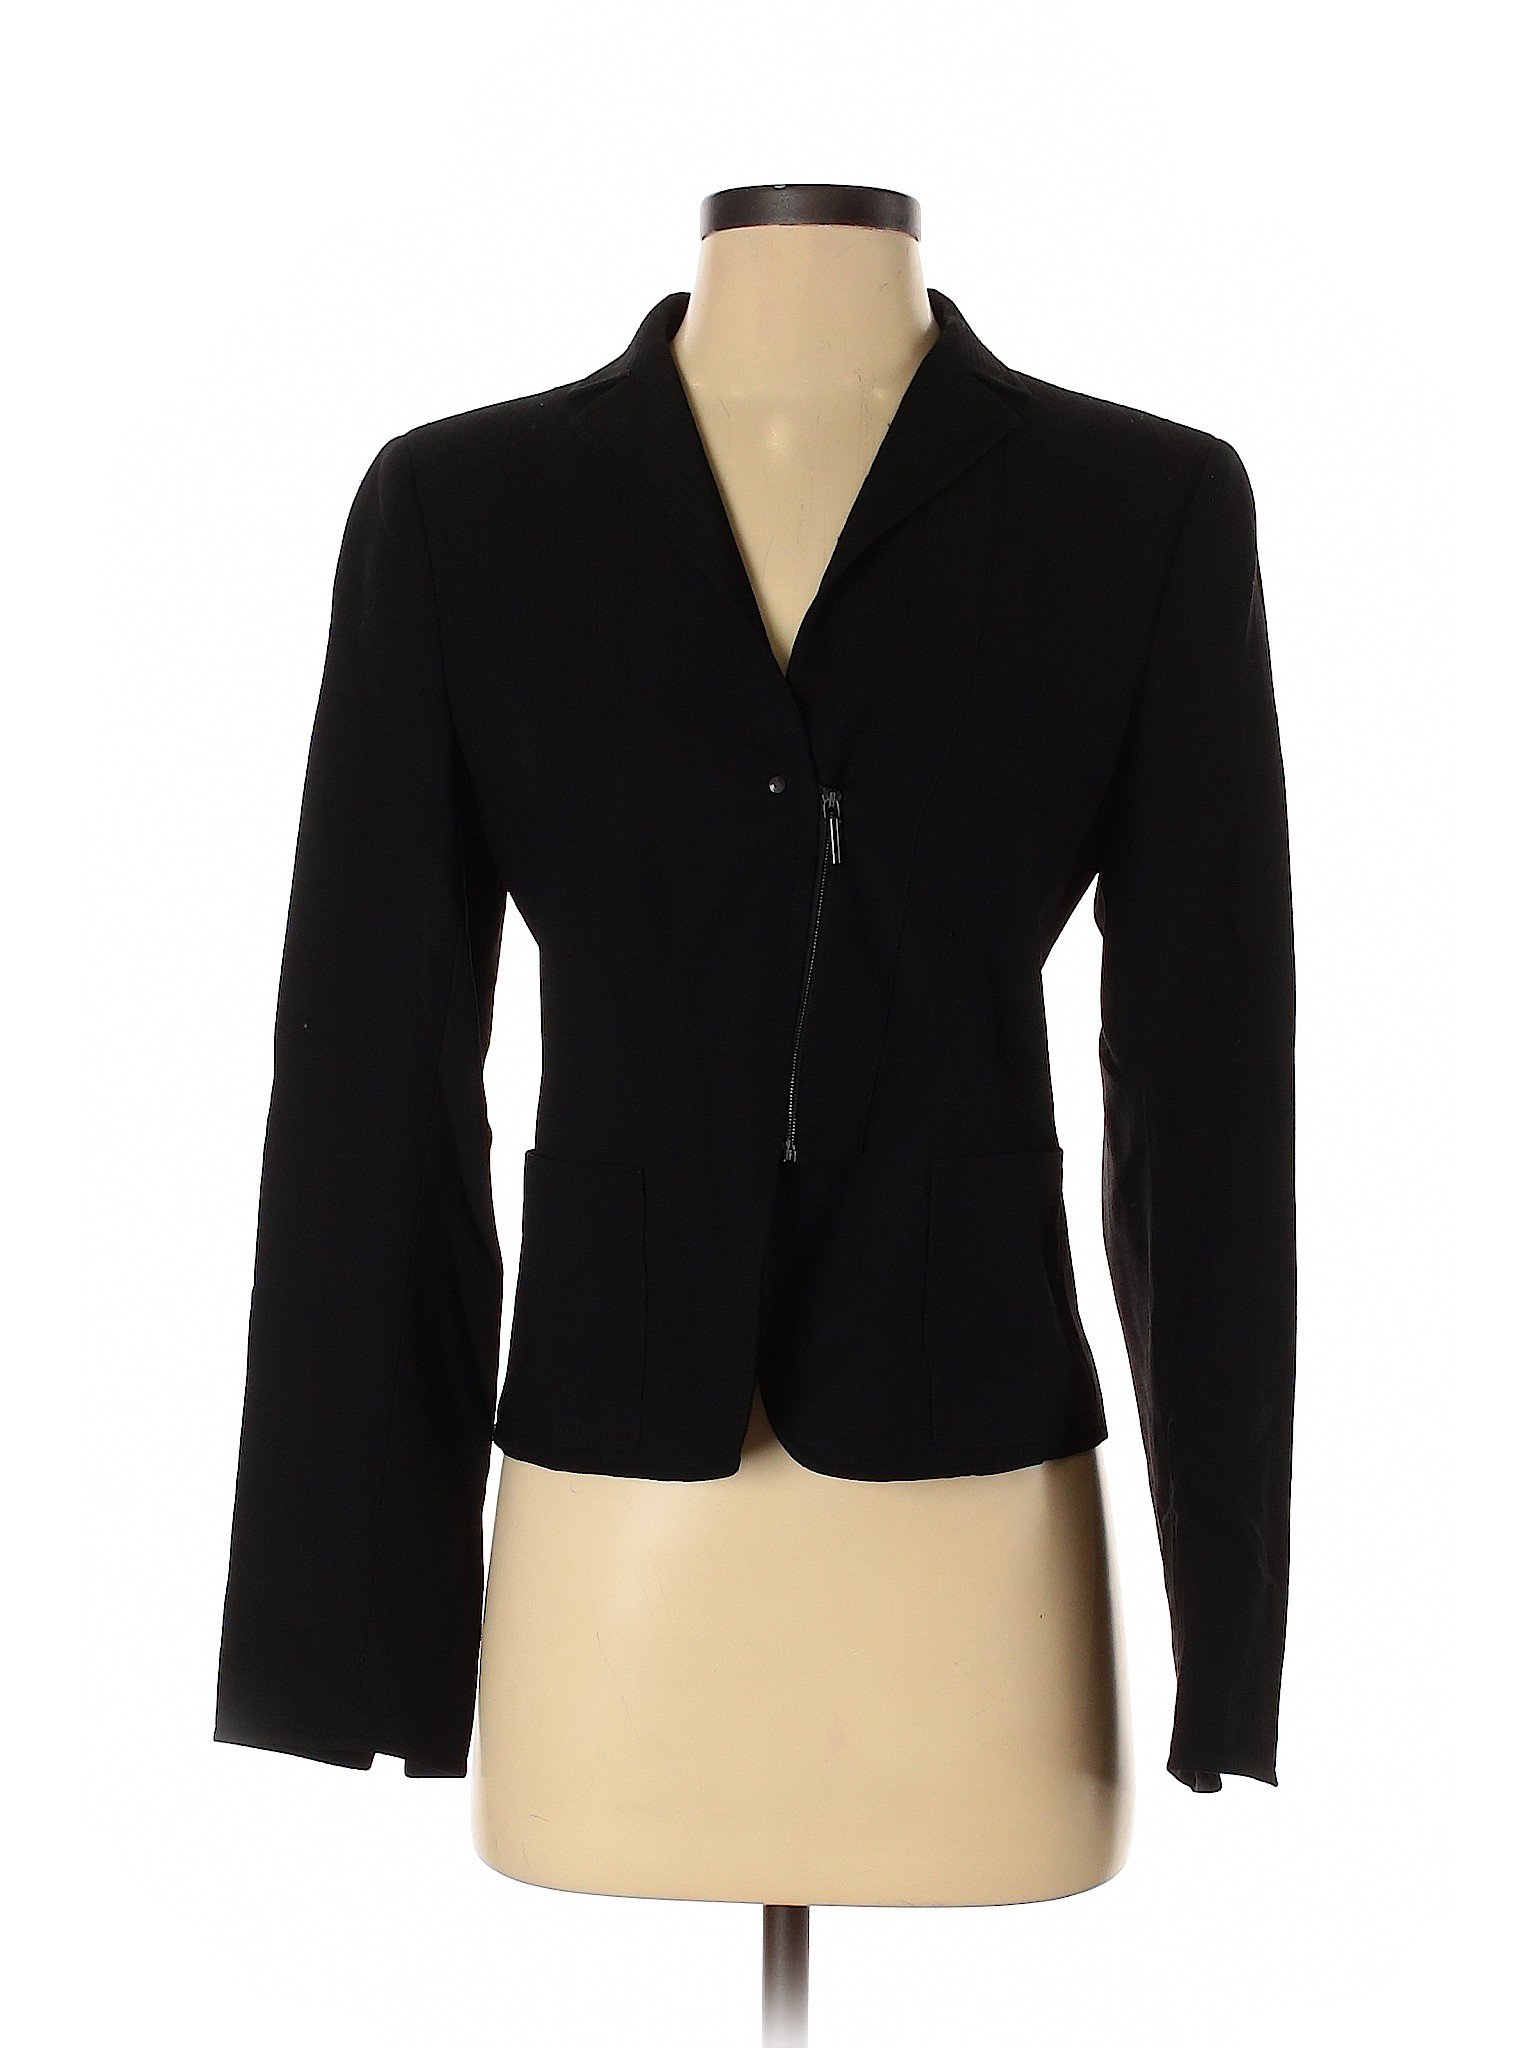 Akris Punto for Saks Fifth Avenue Women Black Wool Blazer 4 | eBay